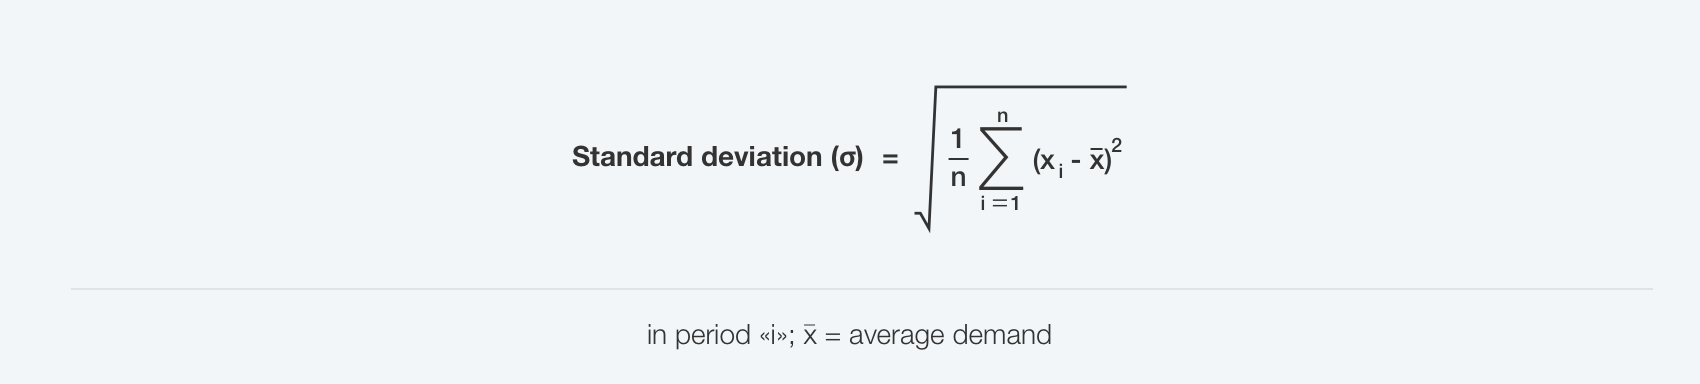 standard-deviation-formula